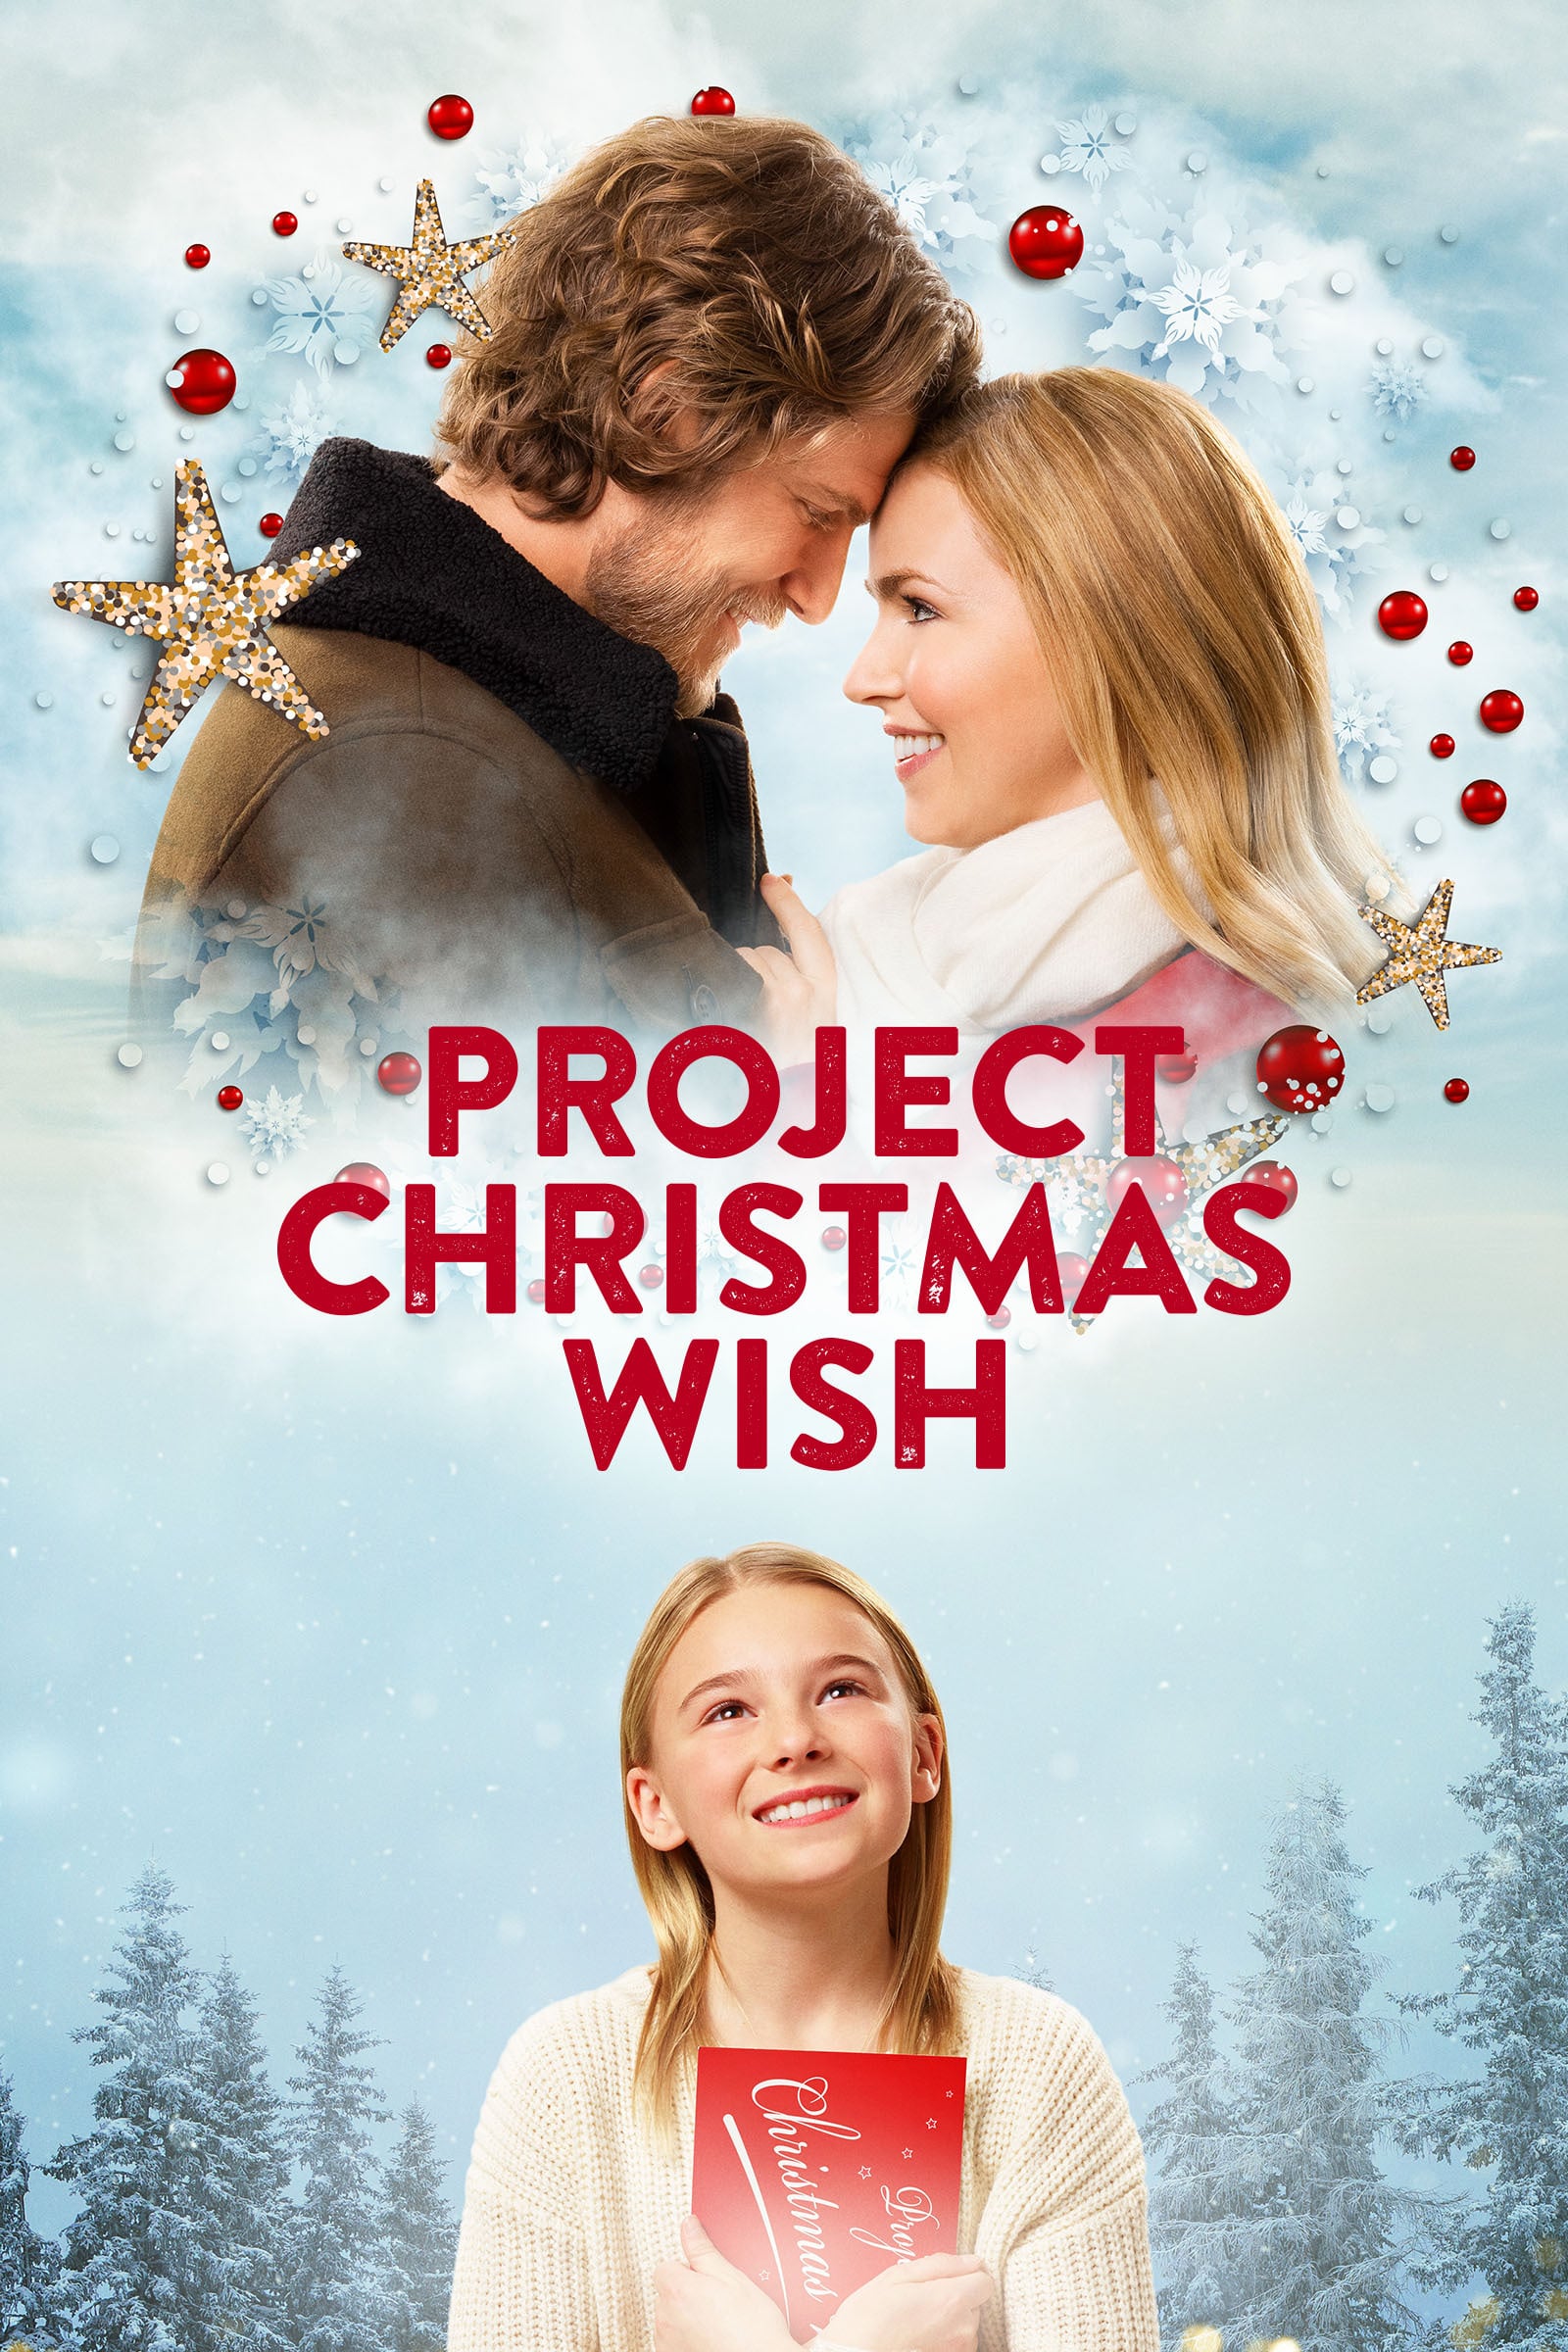 Project Christmas Wish (2020)